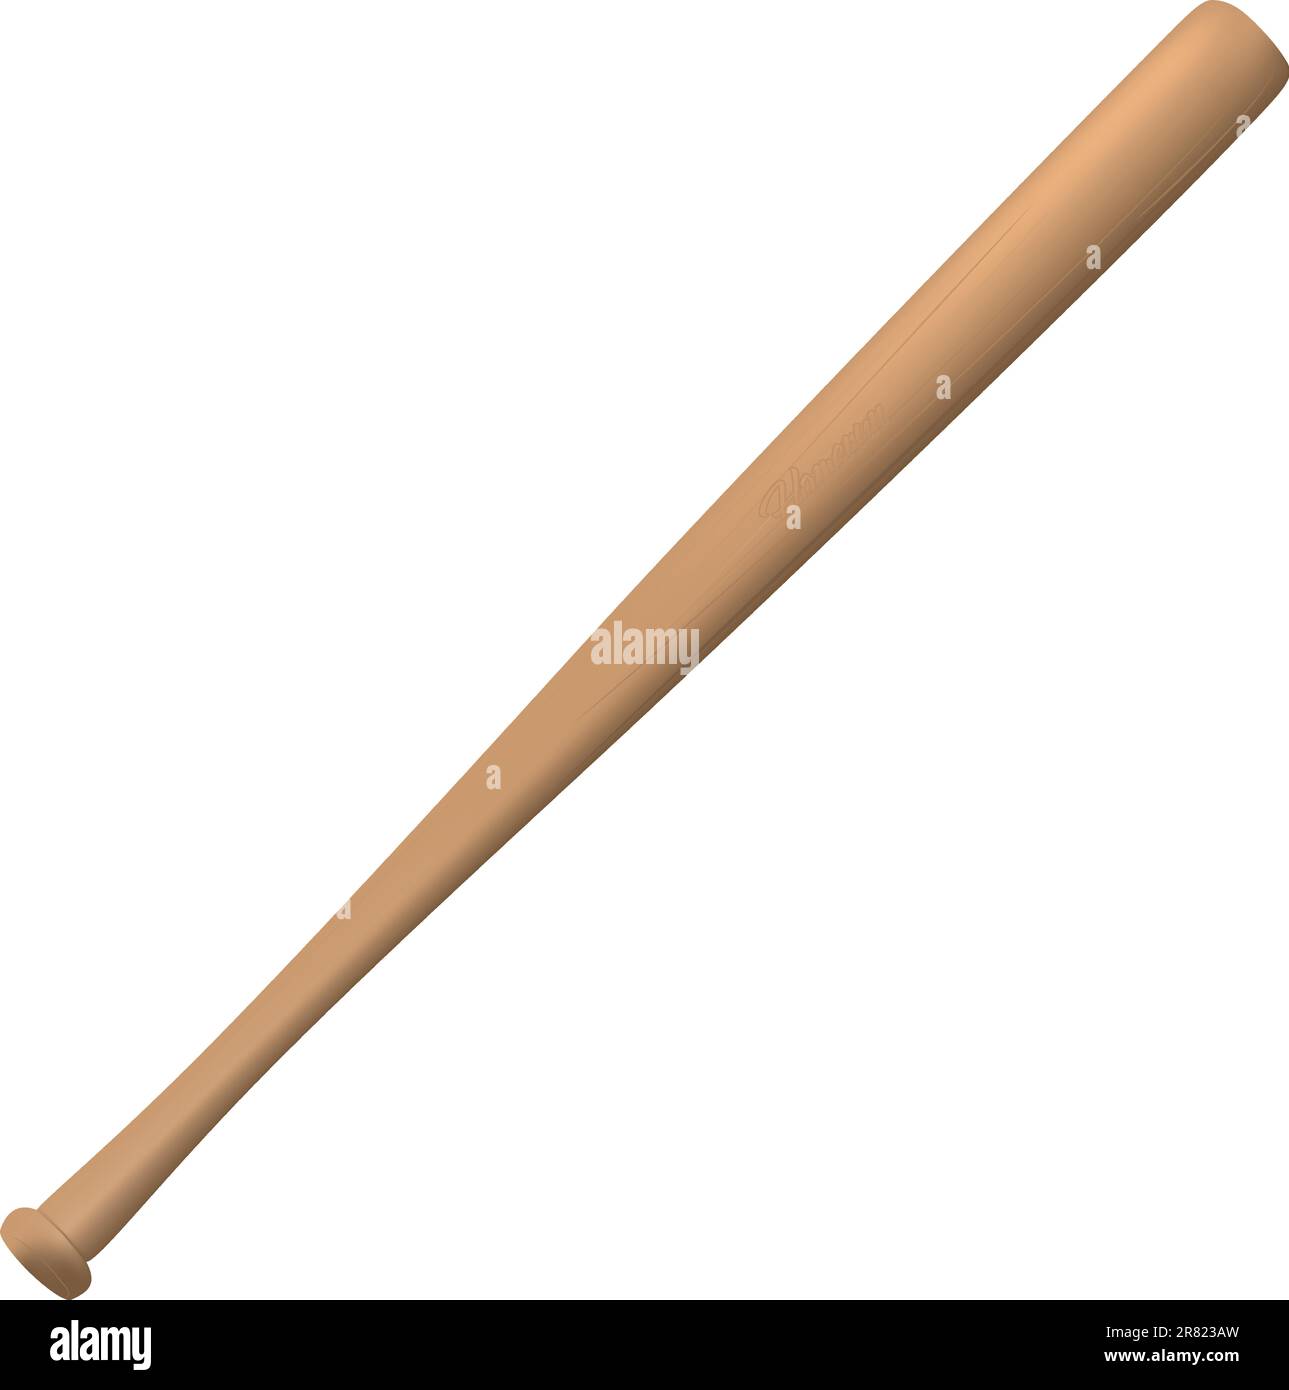 Illustration/Image of a baseball bat Stock Vector